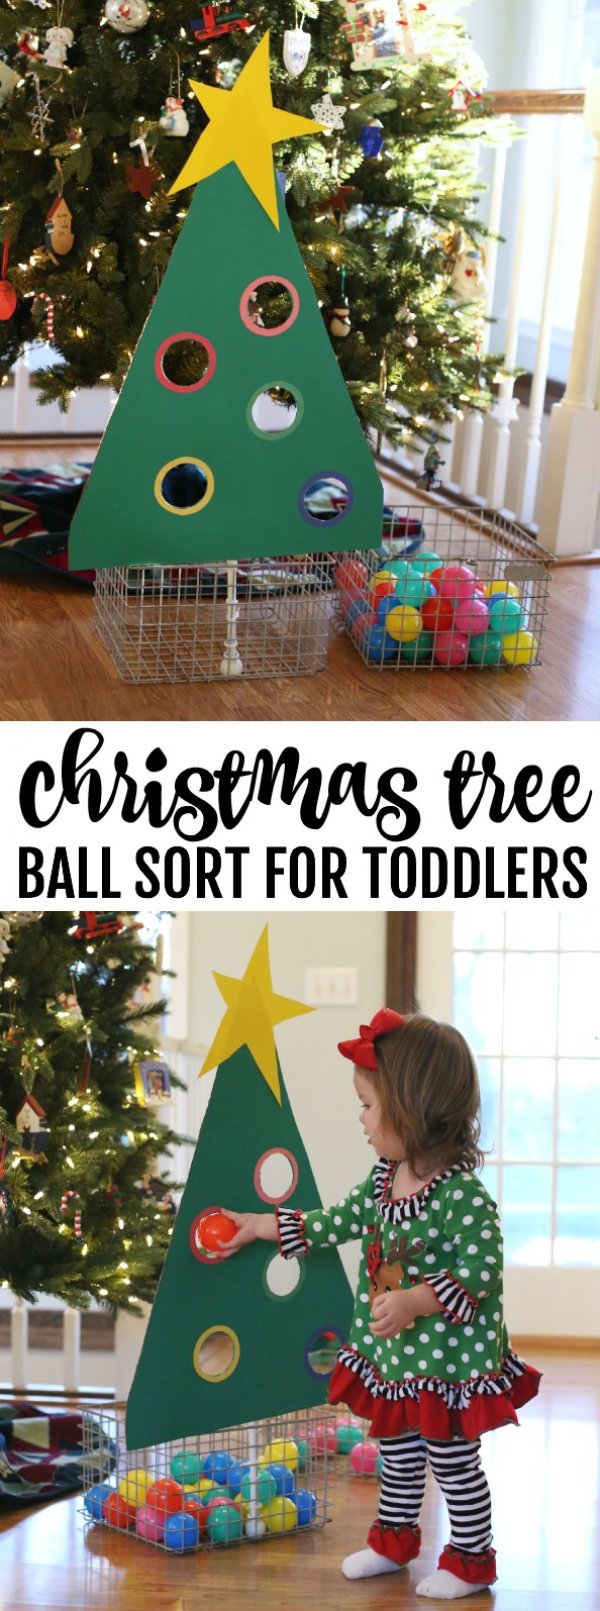 Christmas tree ball sort for toddlers.